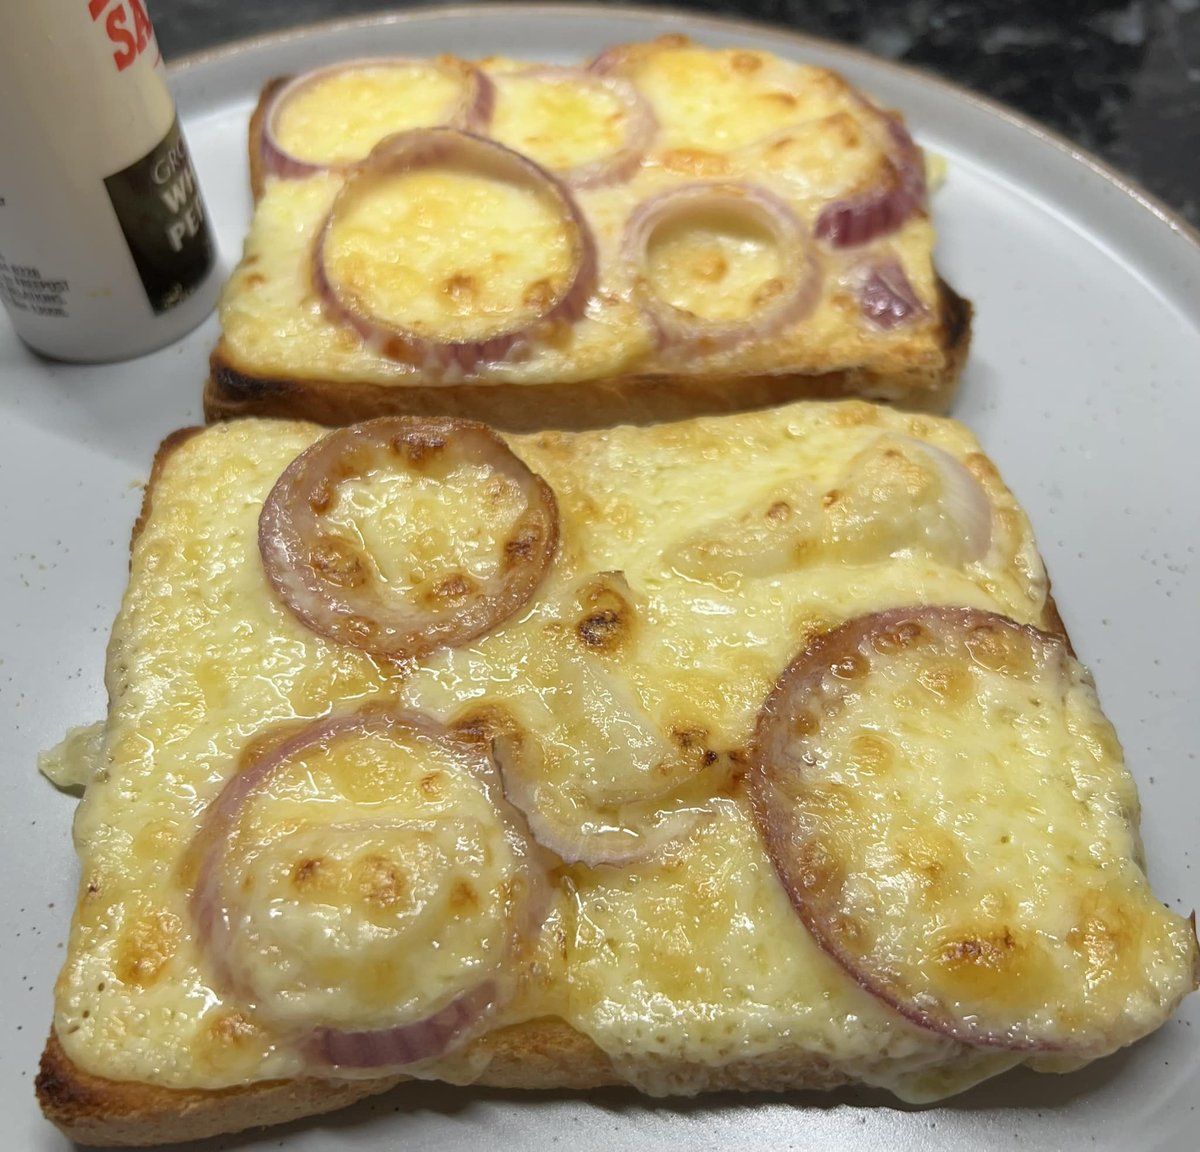 RT @ratemyplatenow: Cheese & Onion on Toast by Jenny https://t.co/0eSqVgBbiE